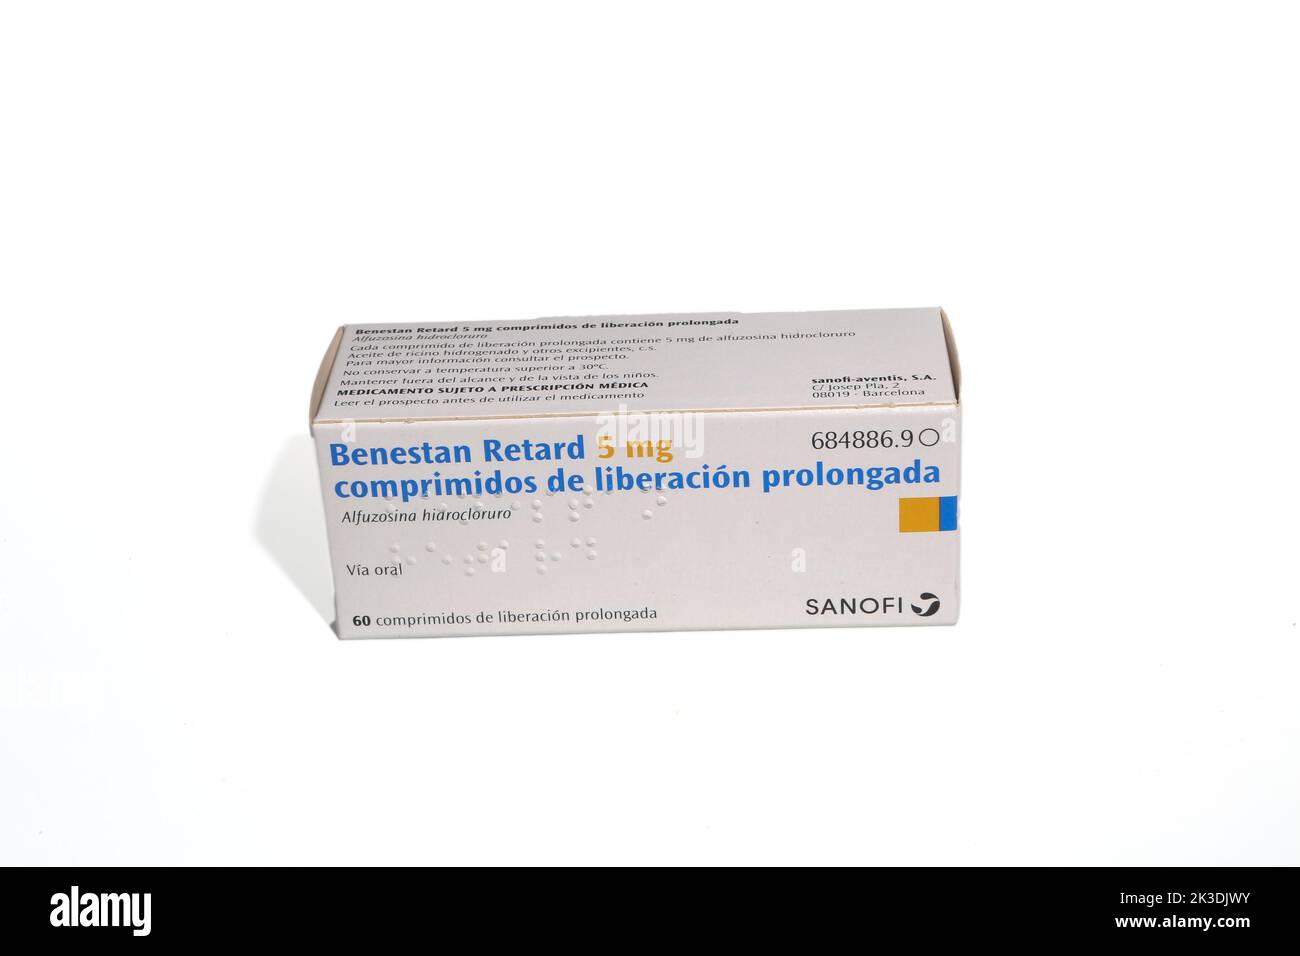 BENESTAN RETARD 5 mg COMPRIMIDOS DE LIBERACION PROLONGADA Stock Photo